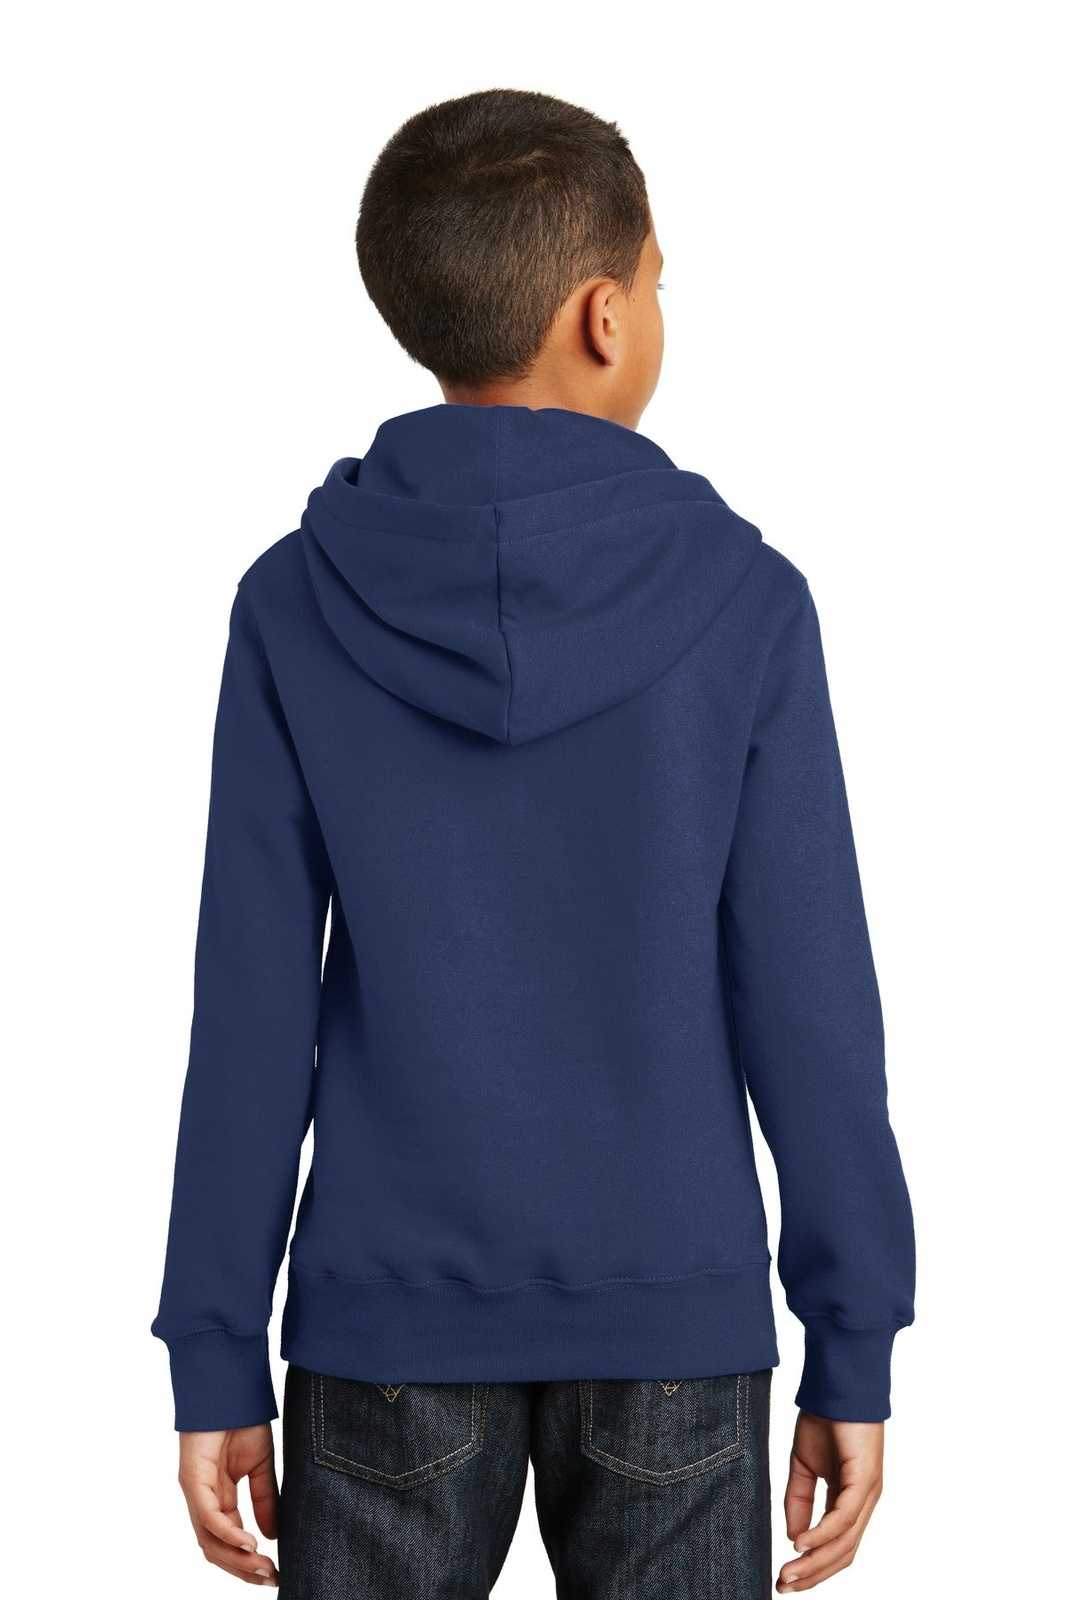 Port & Company PC850YH Youth Fan Favorite Fleece Pullover Hooded Sweatshirt - Team Navy - HIT a Double - 1